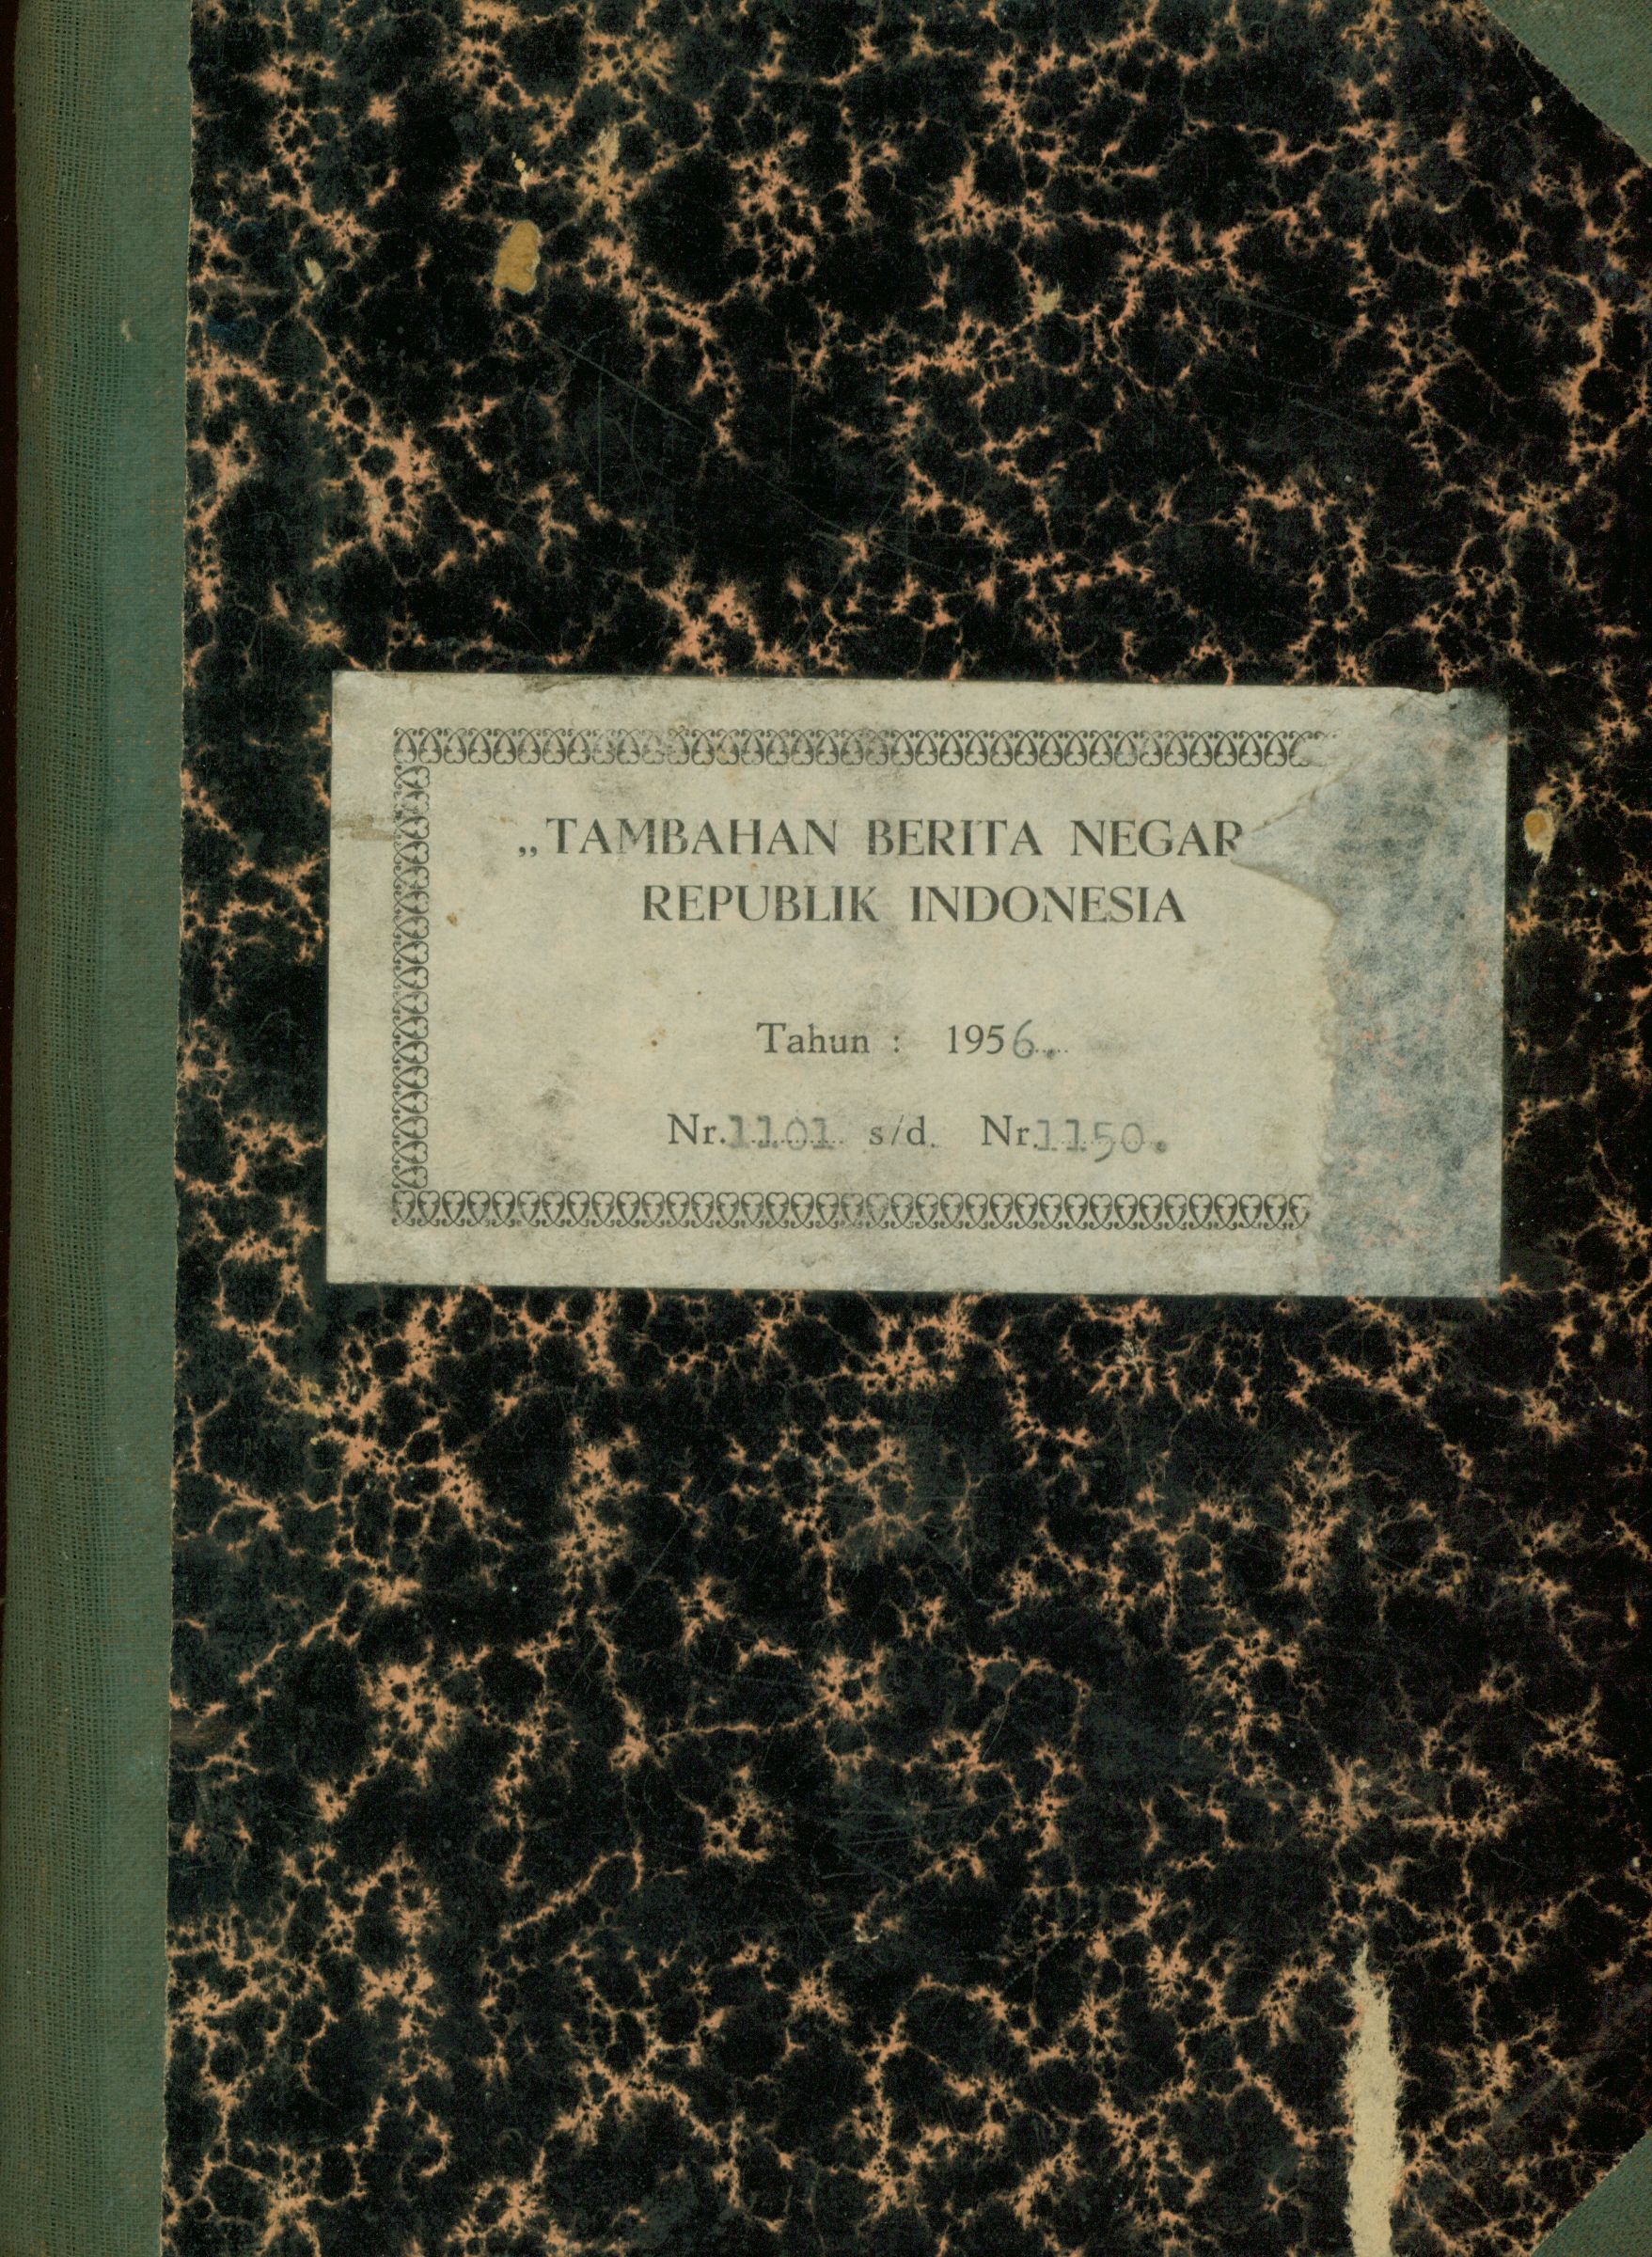 Tambahan Berita Negara Republik Indonesia Tahun : 1956 Nr. 1001 s/d Nr. 1150